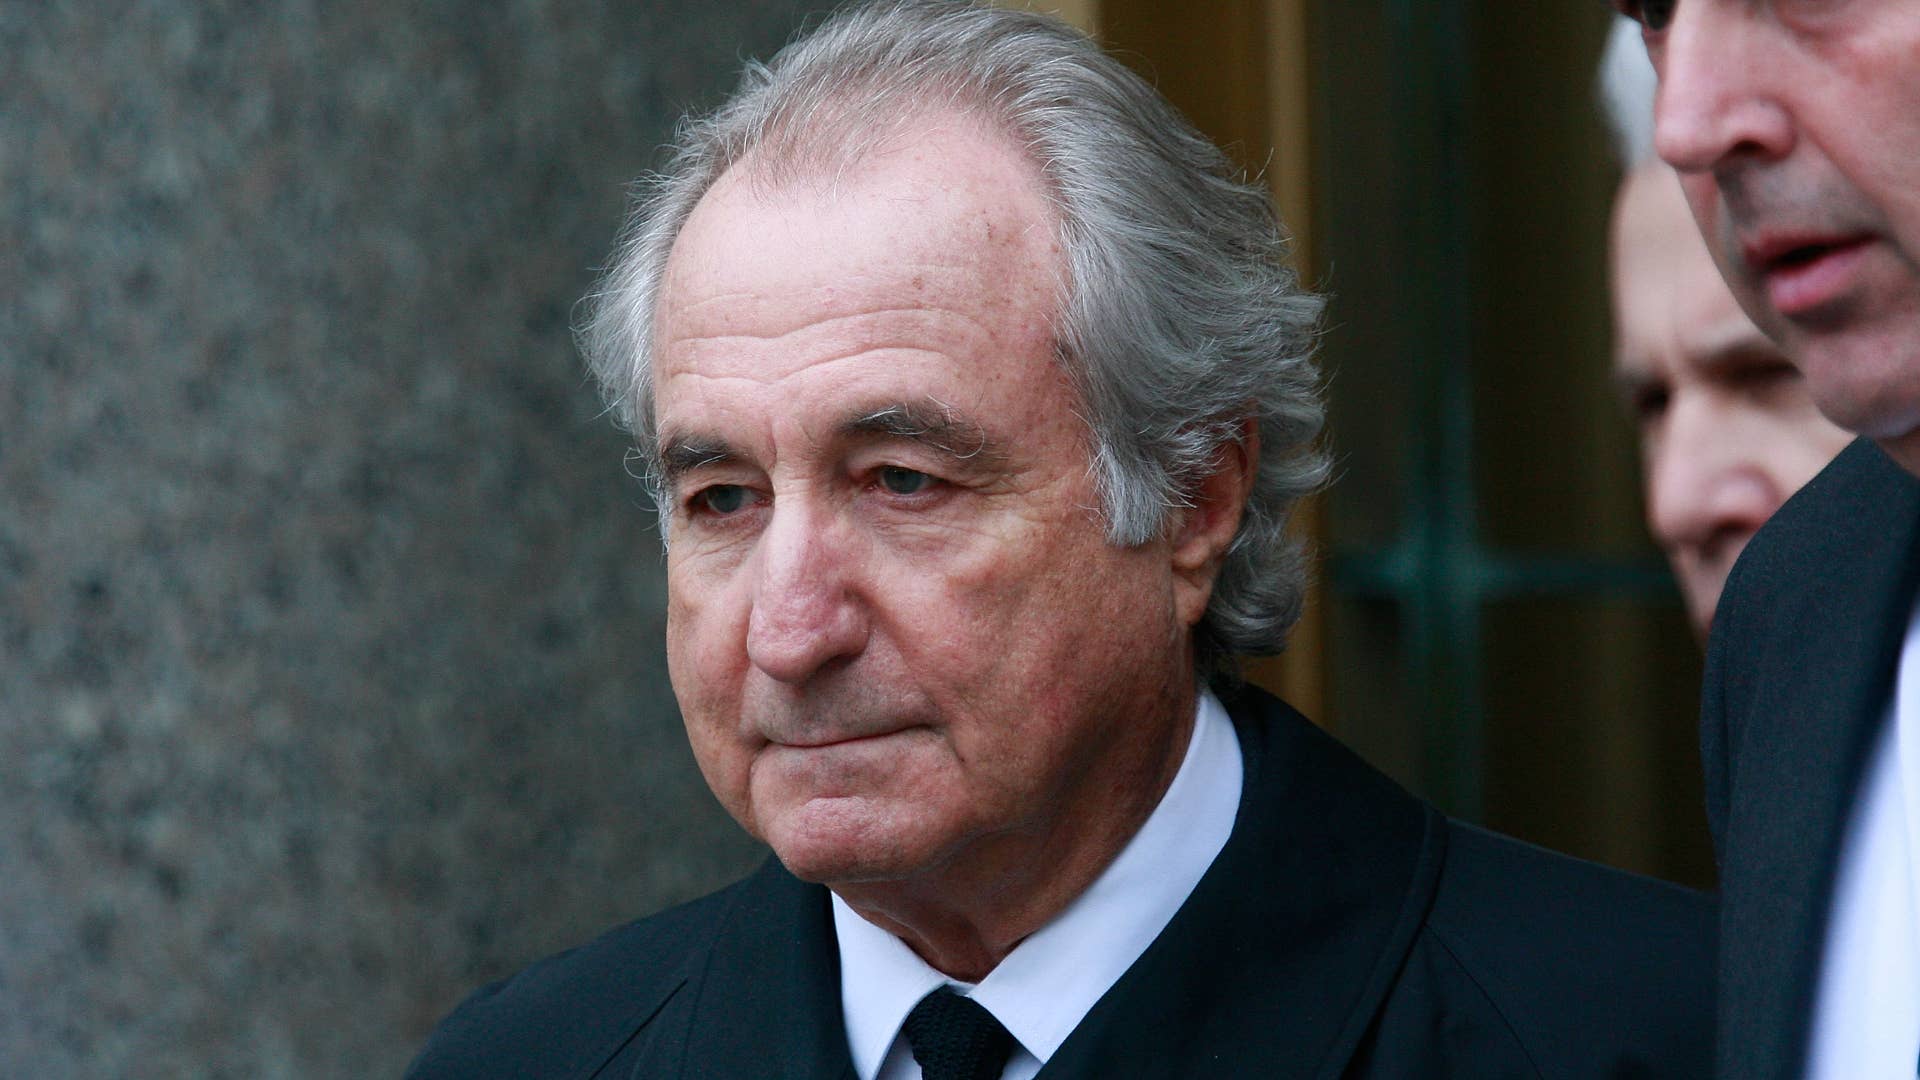 Bernard Madoff photographed leaving court.